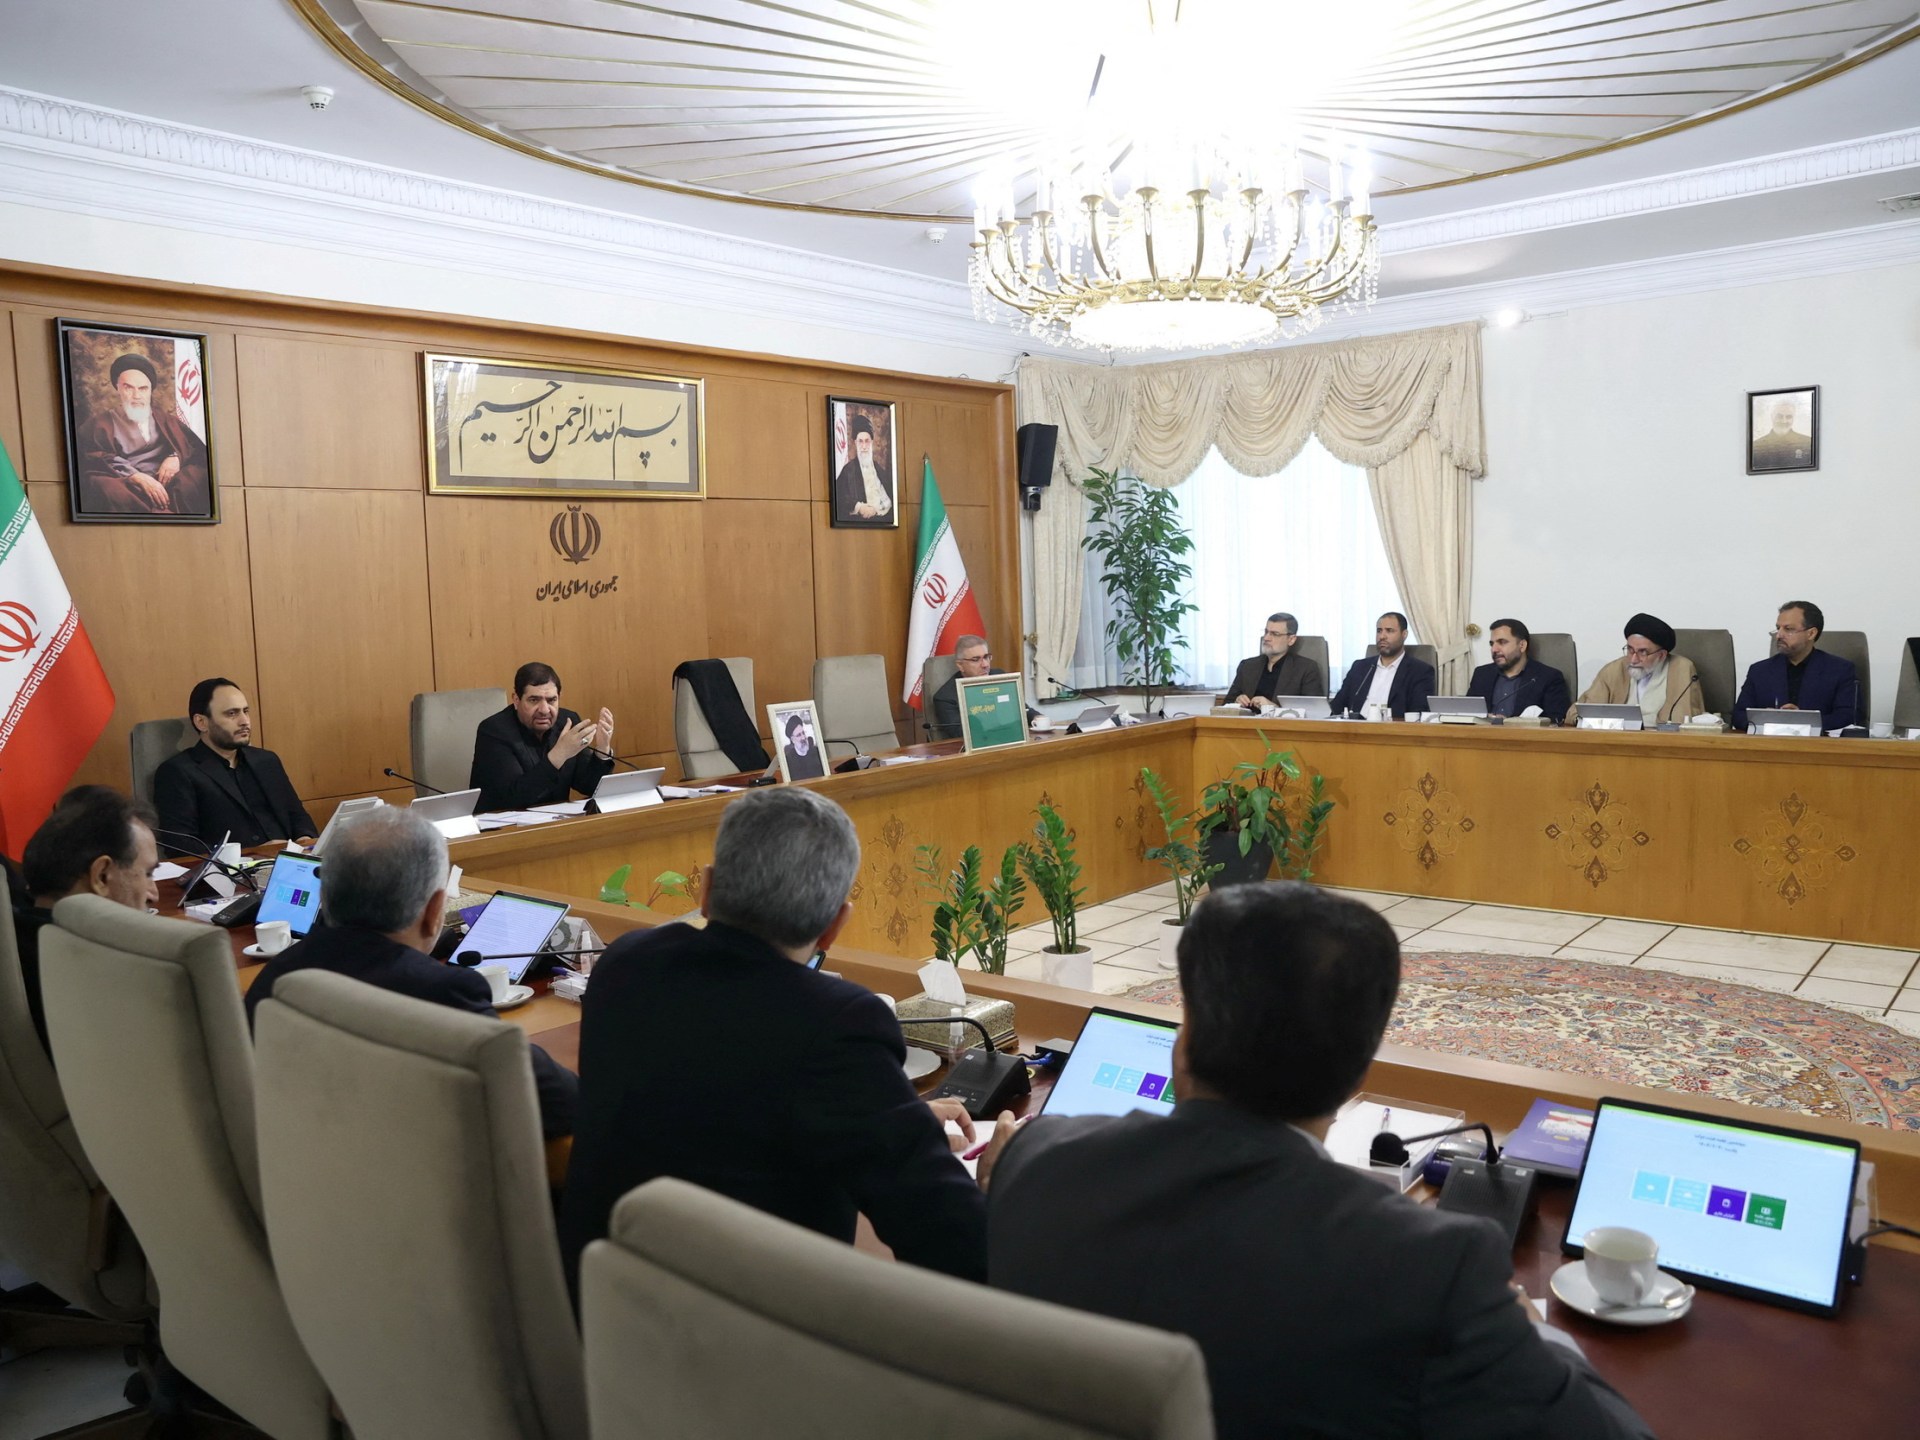 Irans interim president holds first cabinet meeting | Politics [Video]